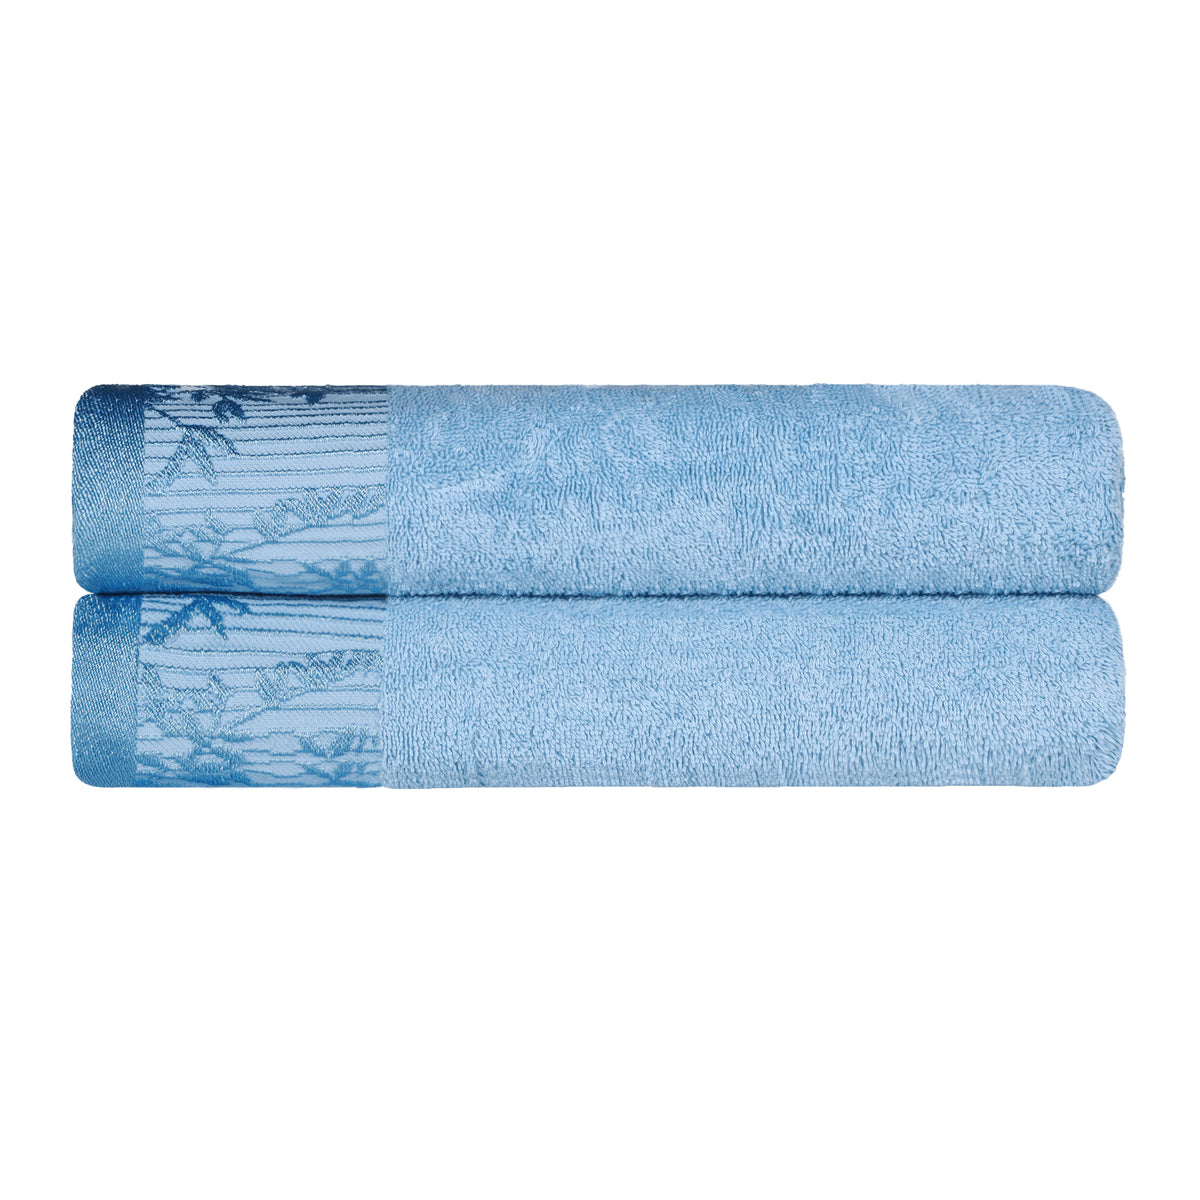 Superior Wisteria Cotton Floral Jacquard Border Bath Towels (Set of 2)